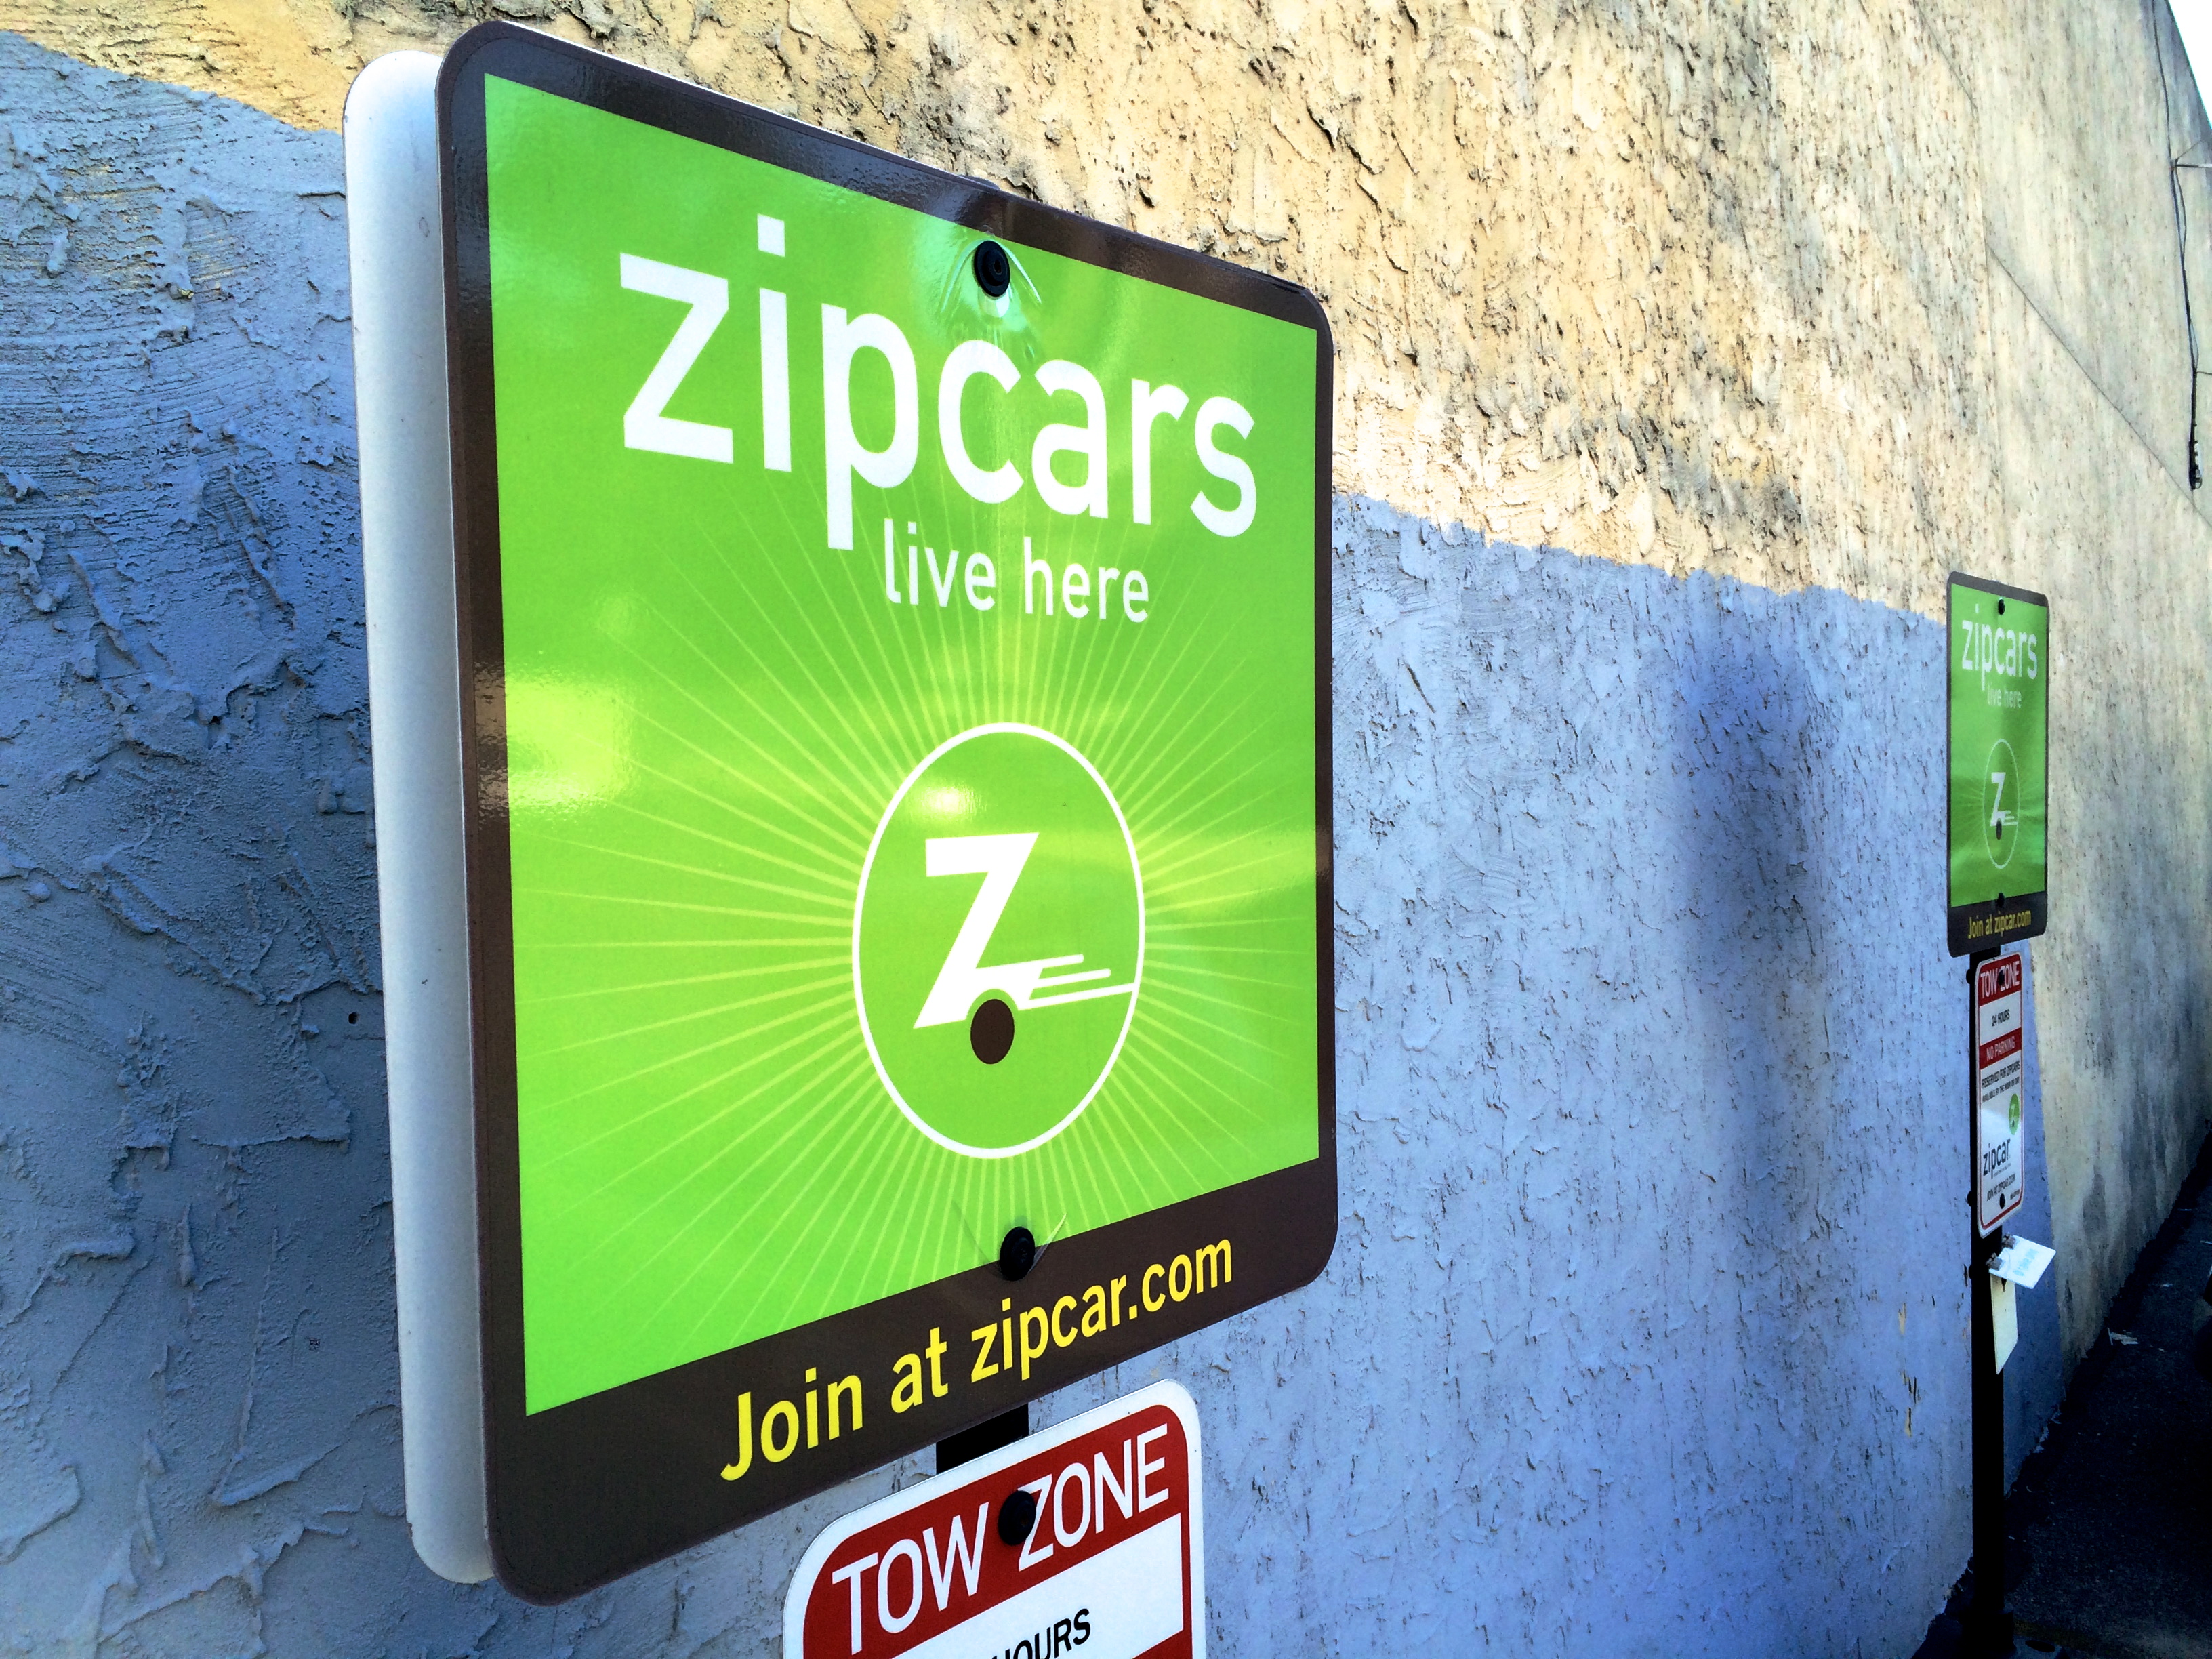 Zipcars Live Here